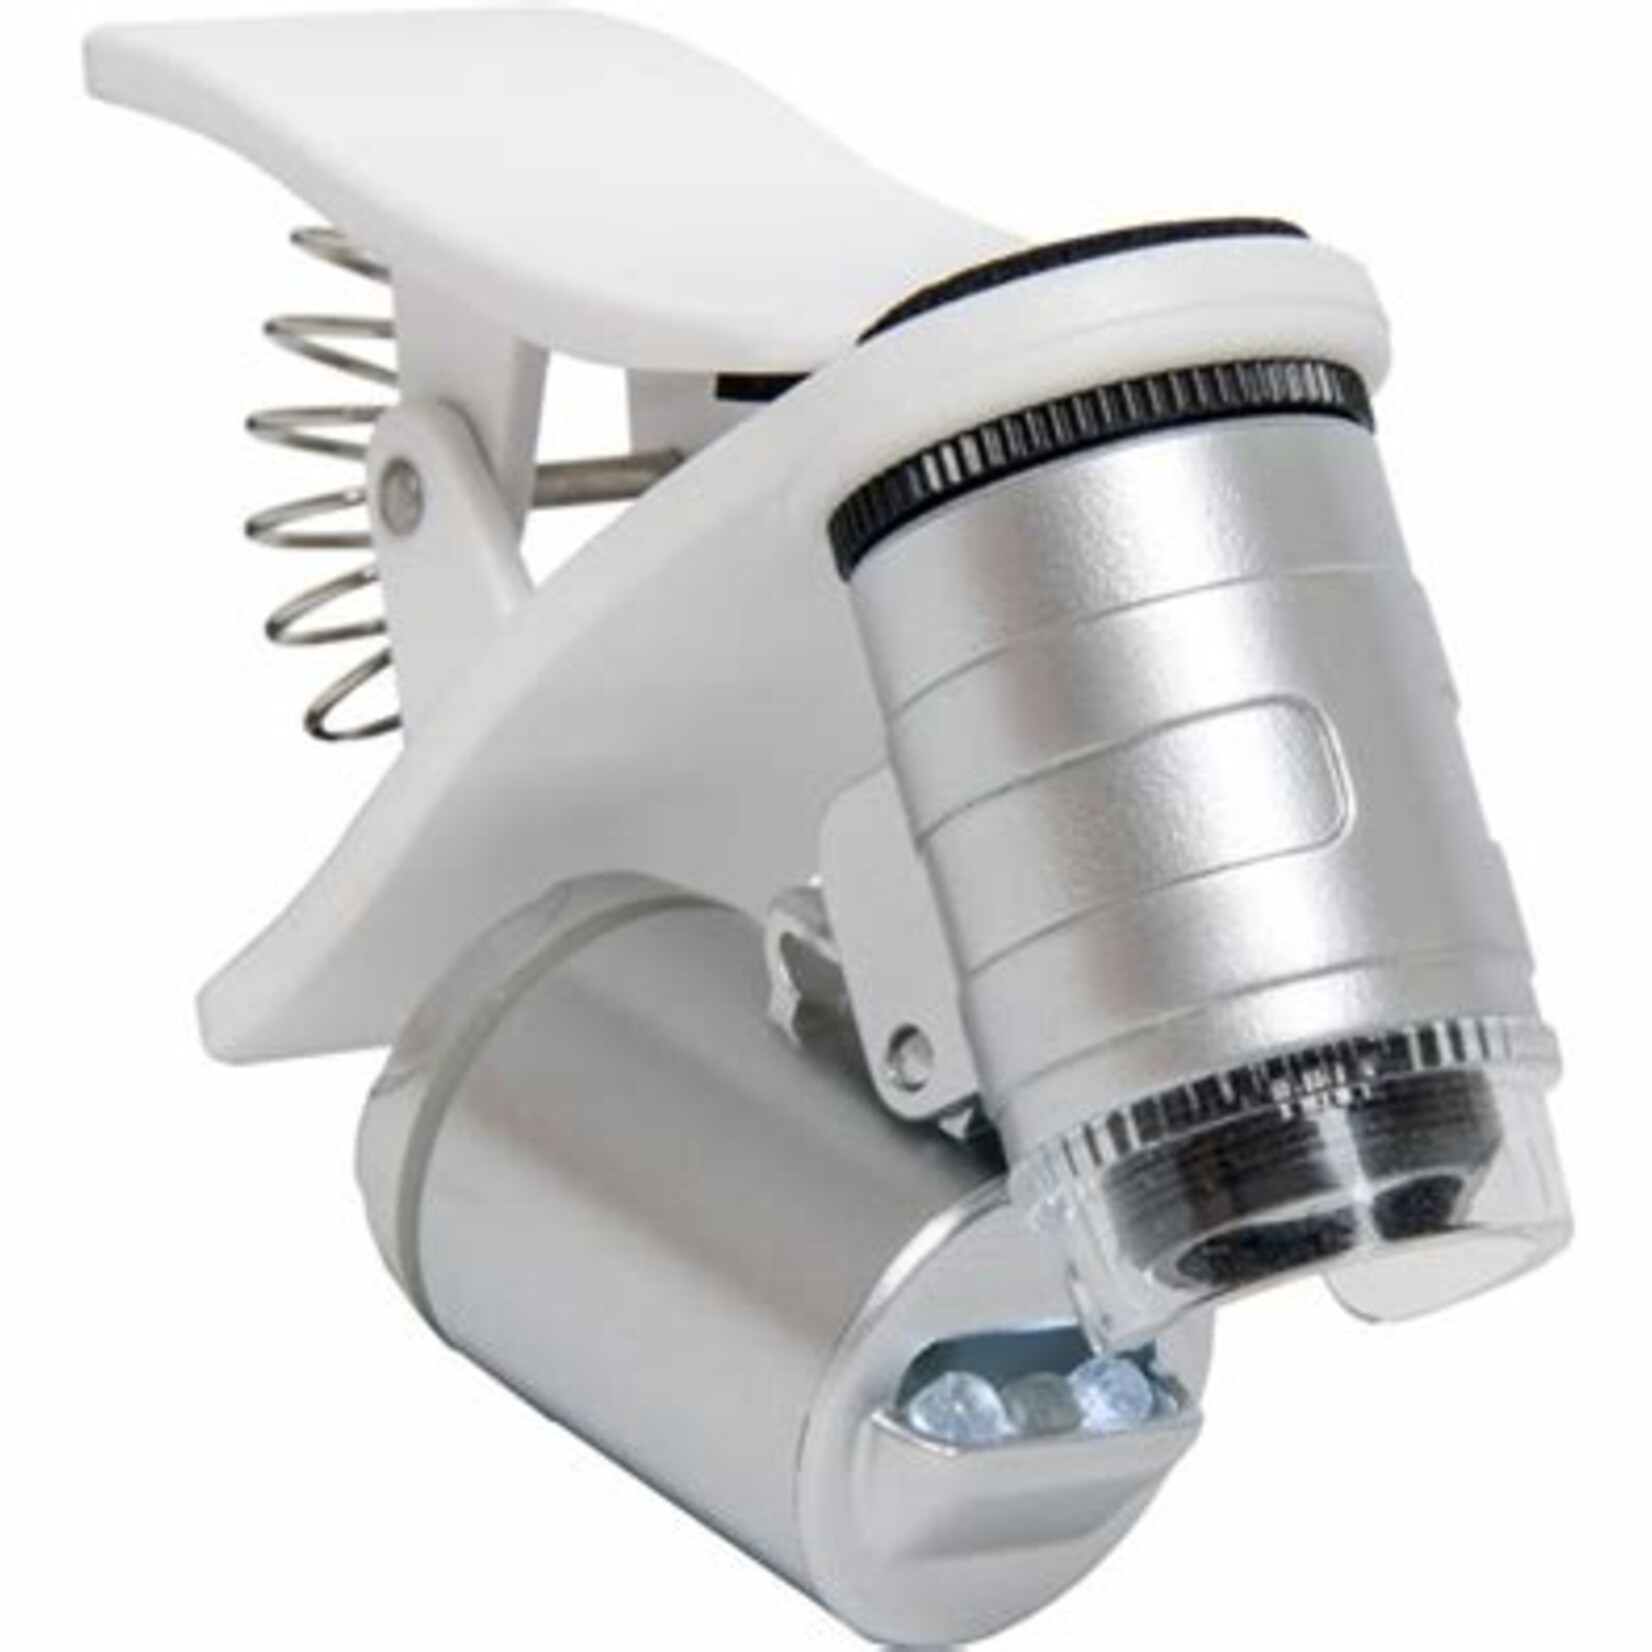 Active Eye Active Eye Universal Phone Microscope 60x w/Clamp